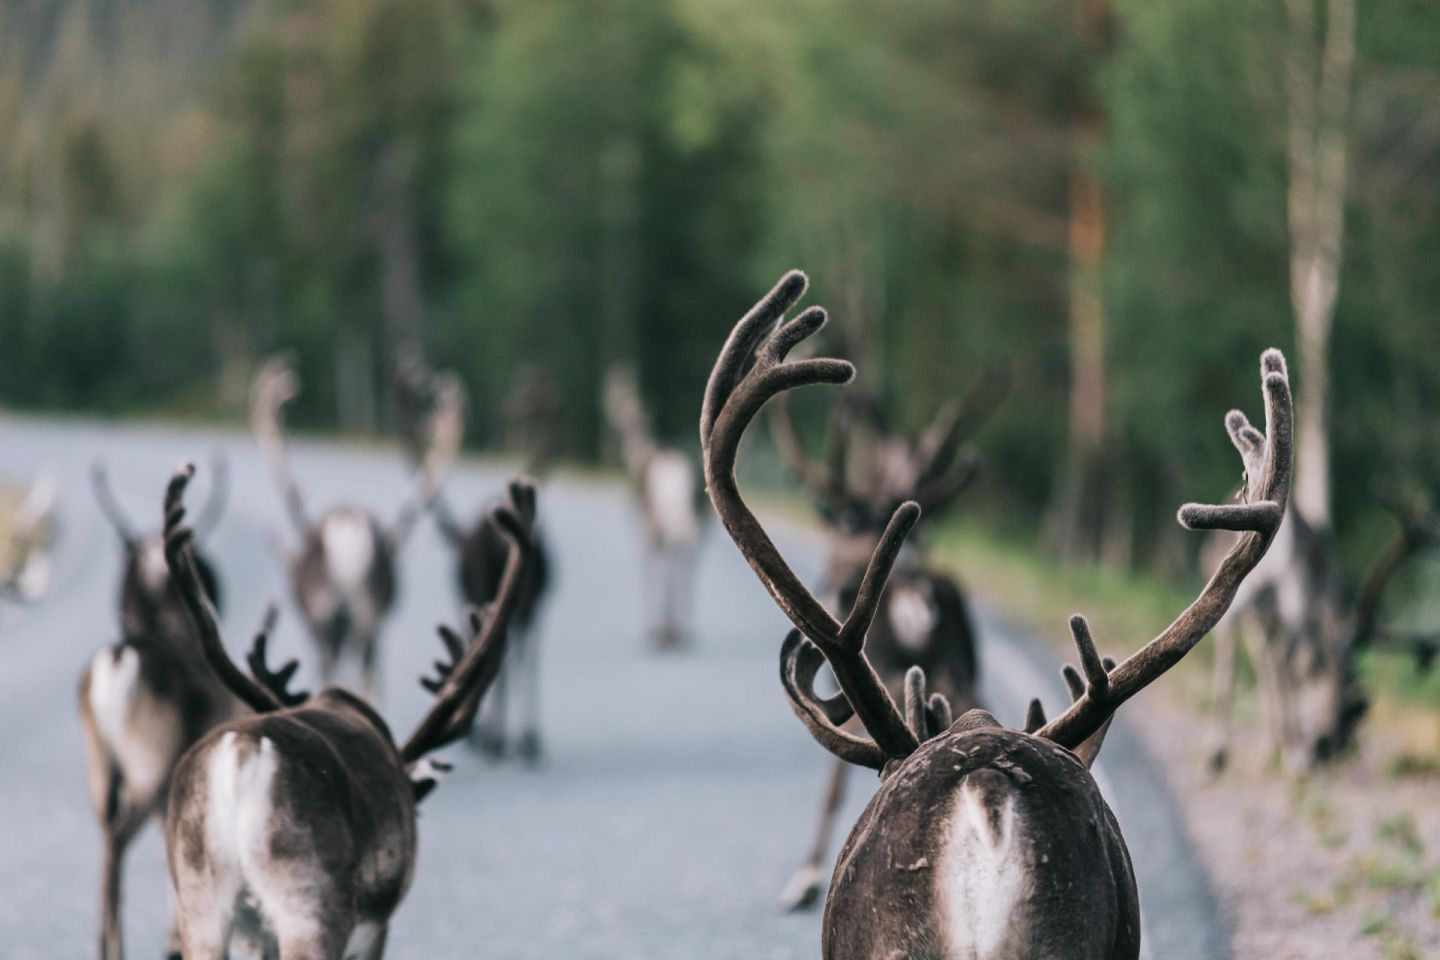 Reindeer on the road in Pallas, Lapland